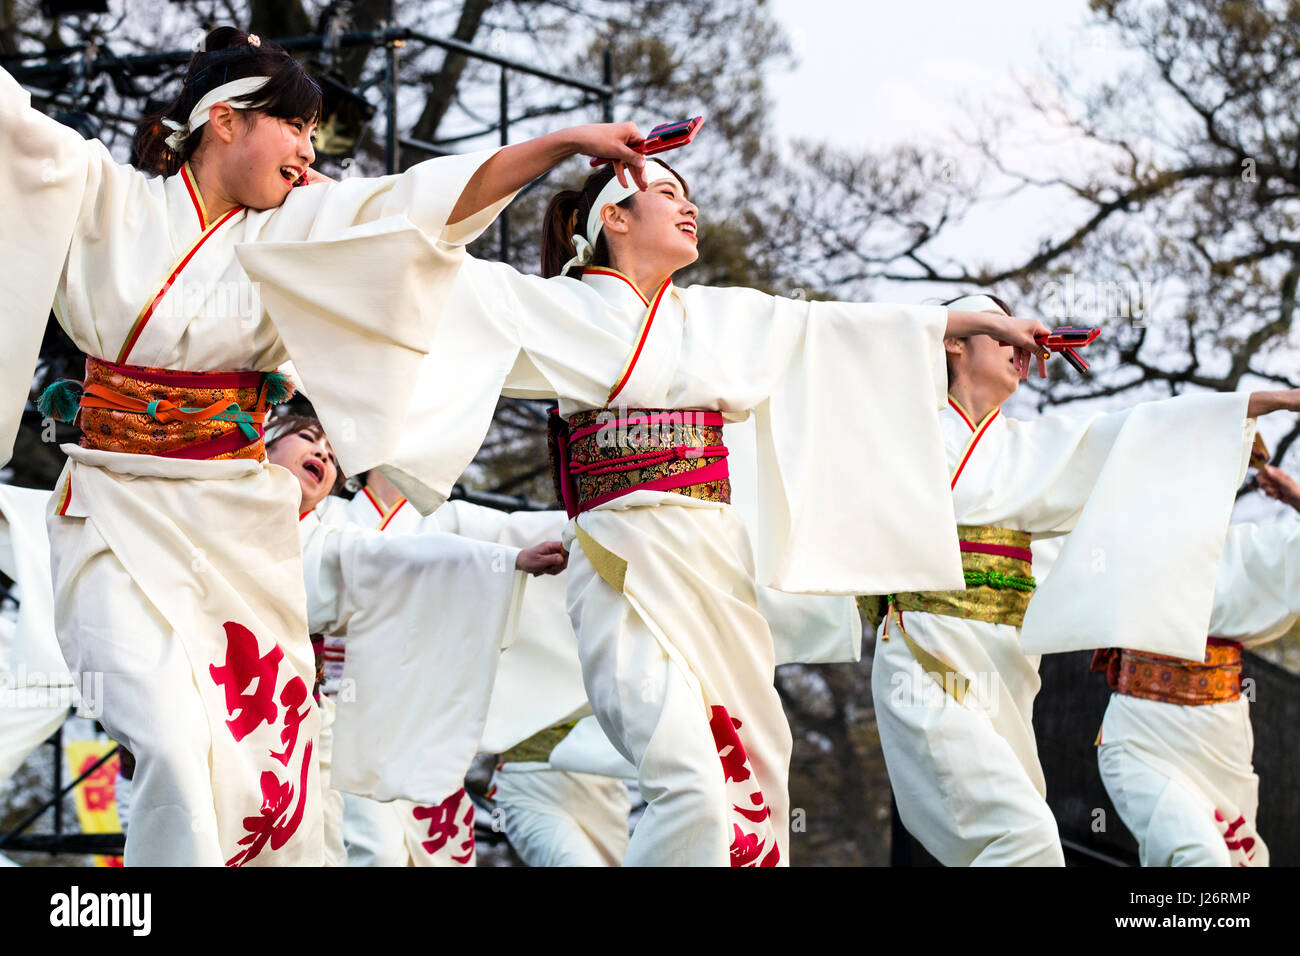 Hinokuni Yosakoi dance Festival at Kumamoto. Japanese women dancing on stage. Wearing white yukata with red sash, and holding naruko, clappers. Stock Photo